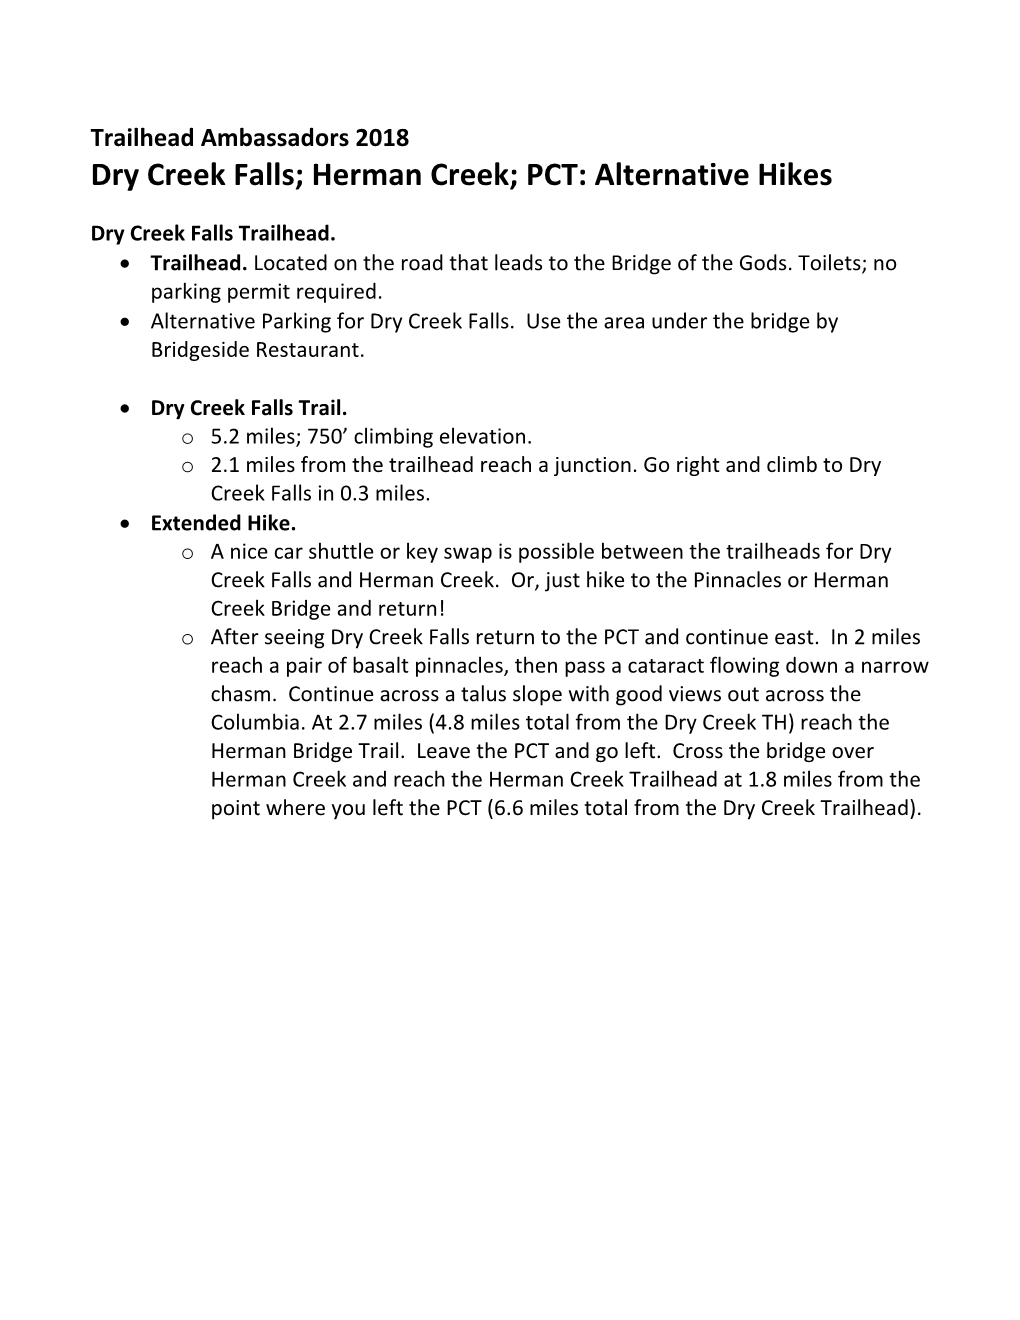 Dry Creek Falls; Herman Creek; PCT: Alternative Hikes